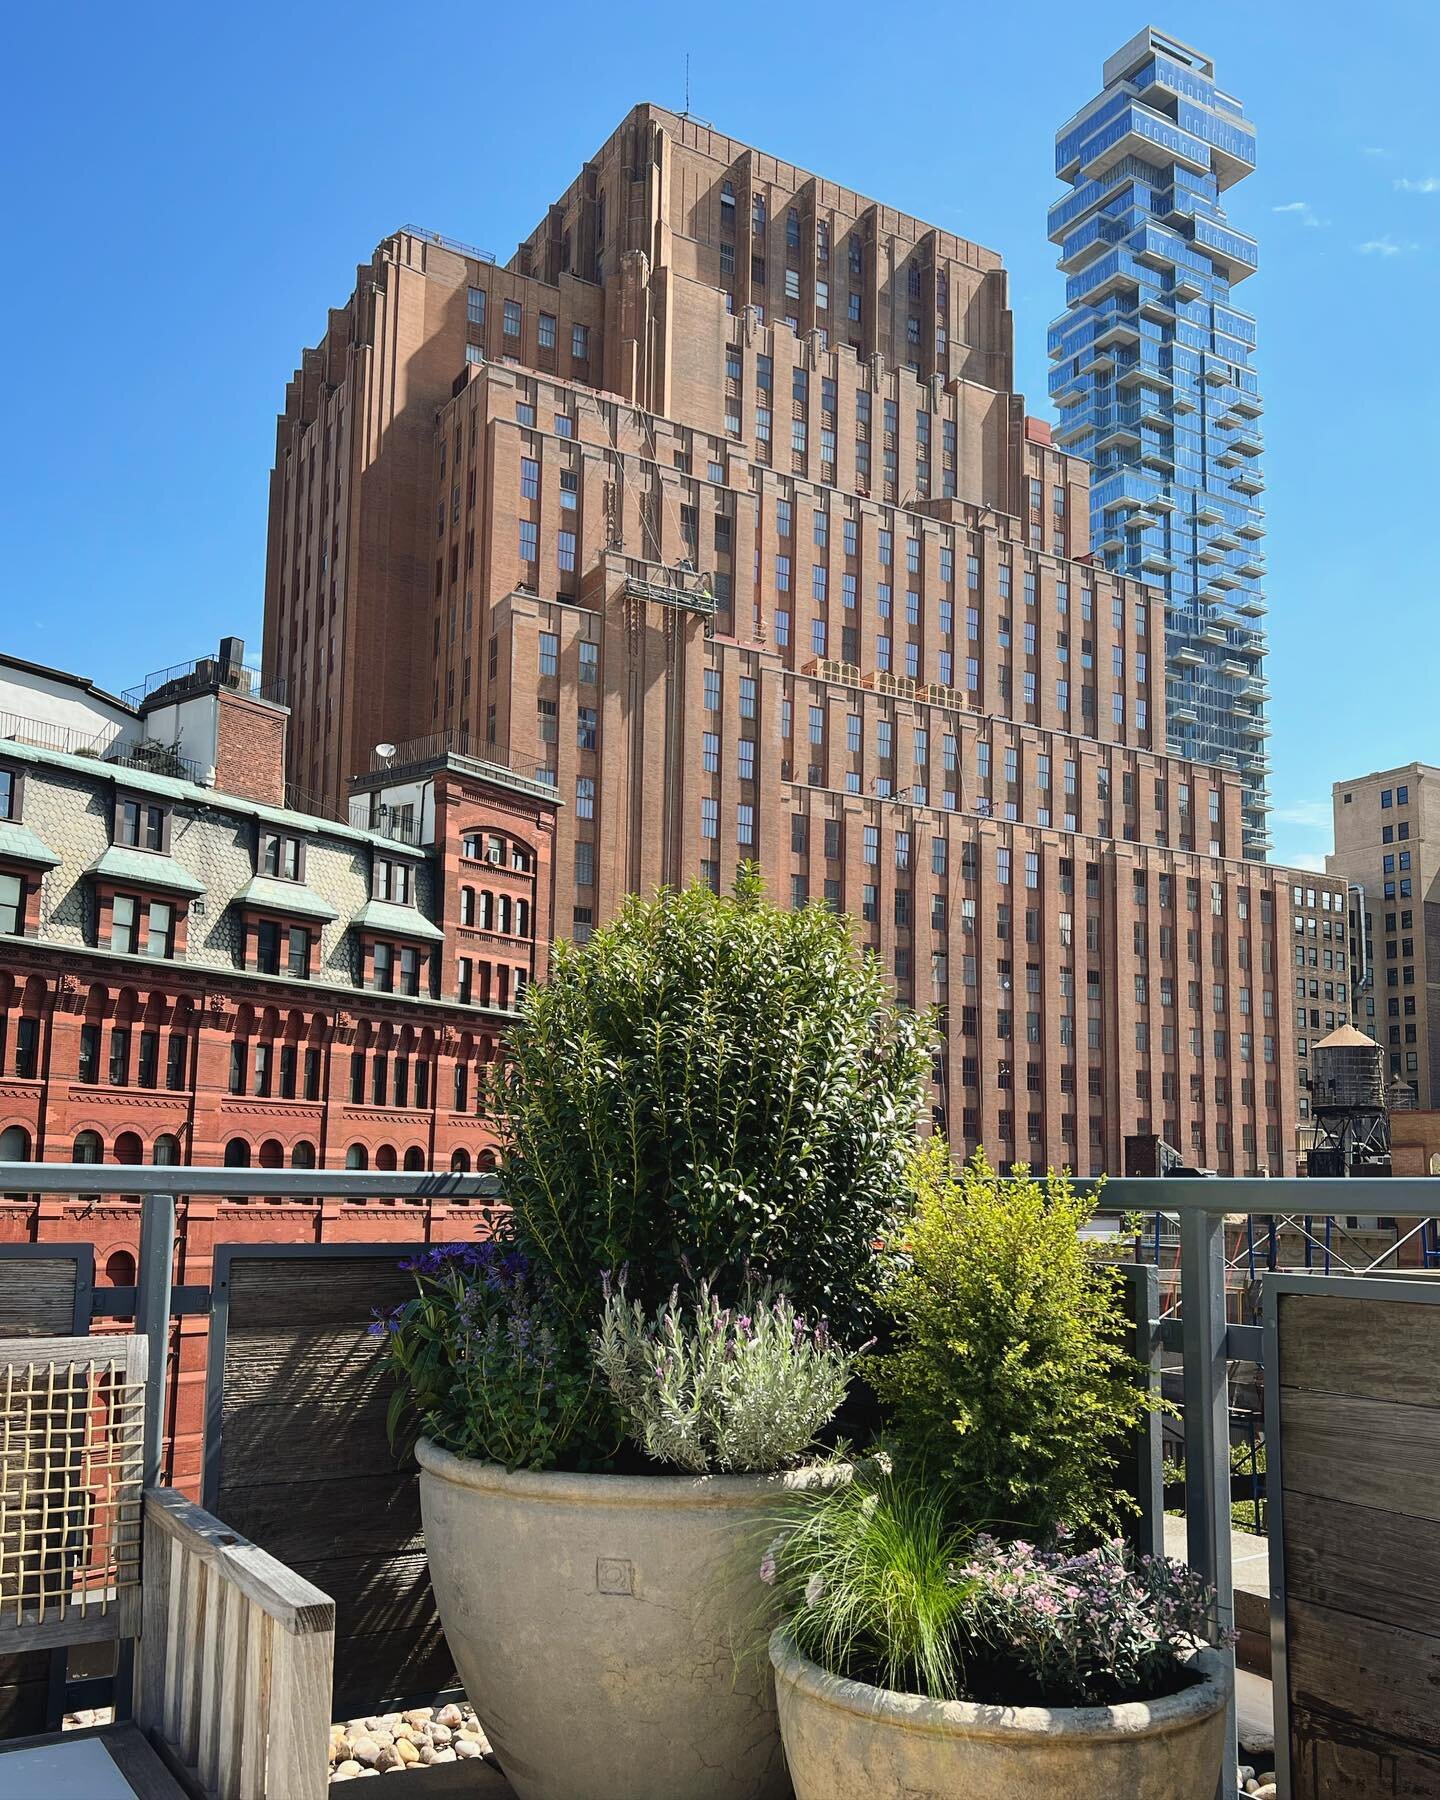 Stunning views from one of four terraces of a gorgeous Tribeca penthouse. Thank you @hoveydesign for bringing @dimasterystudio in!
.
.
.
.
.
.
.
#dimasterystudio #urbangarden #citygarden #gardendesign #sodomino #landscapedesign #plantingdesign #manha